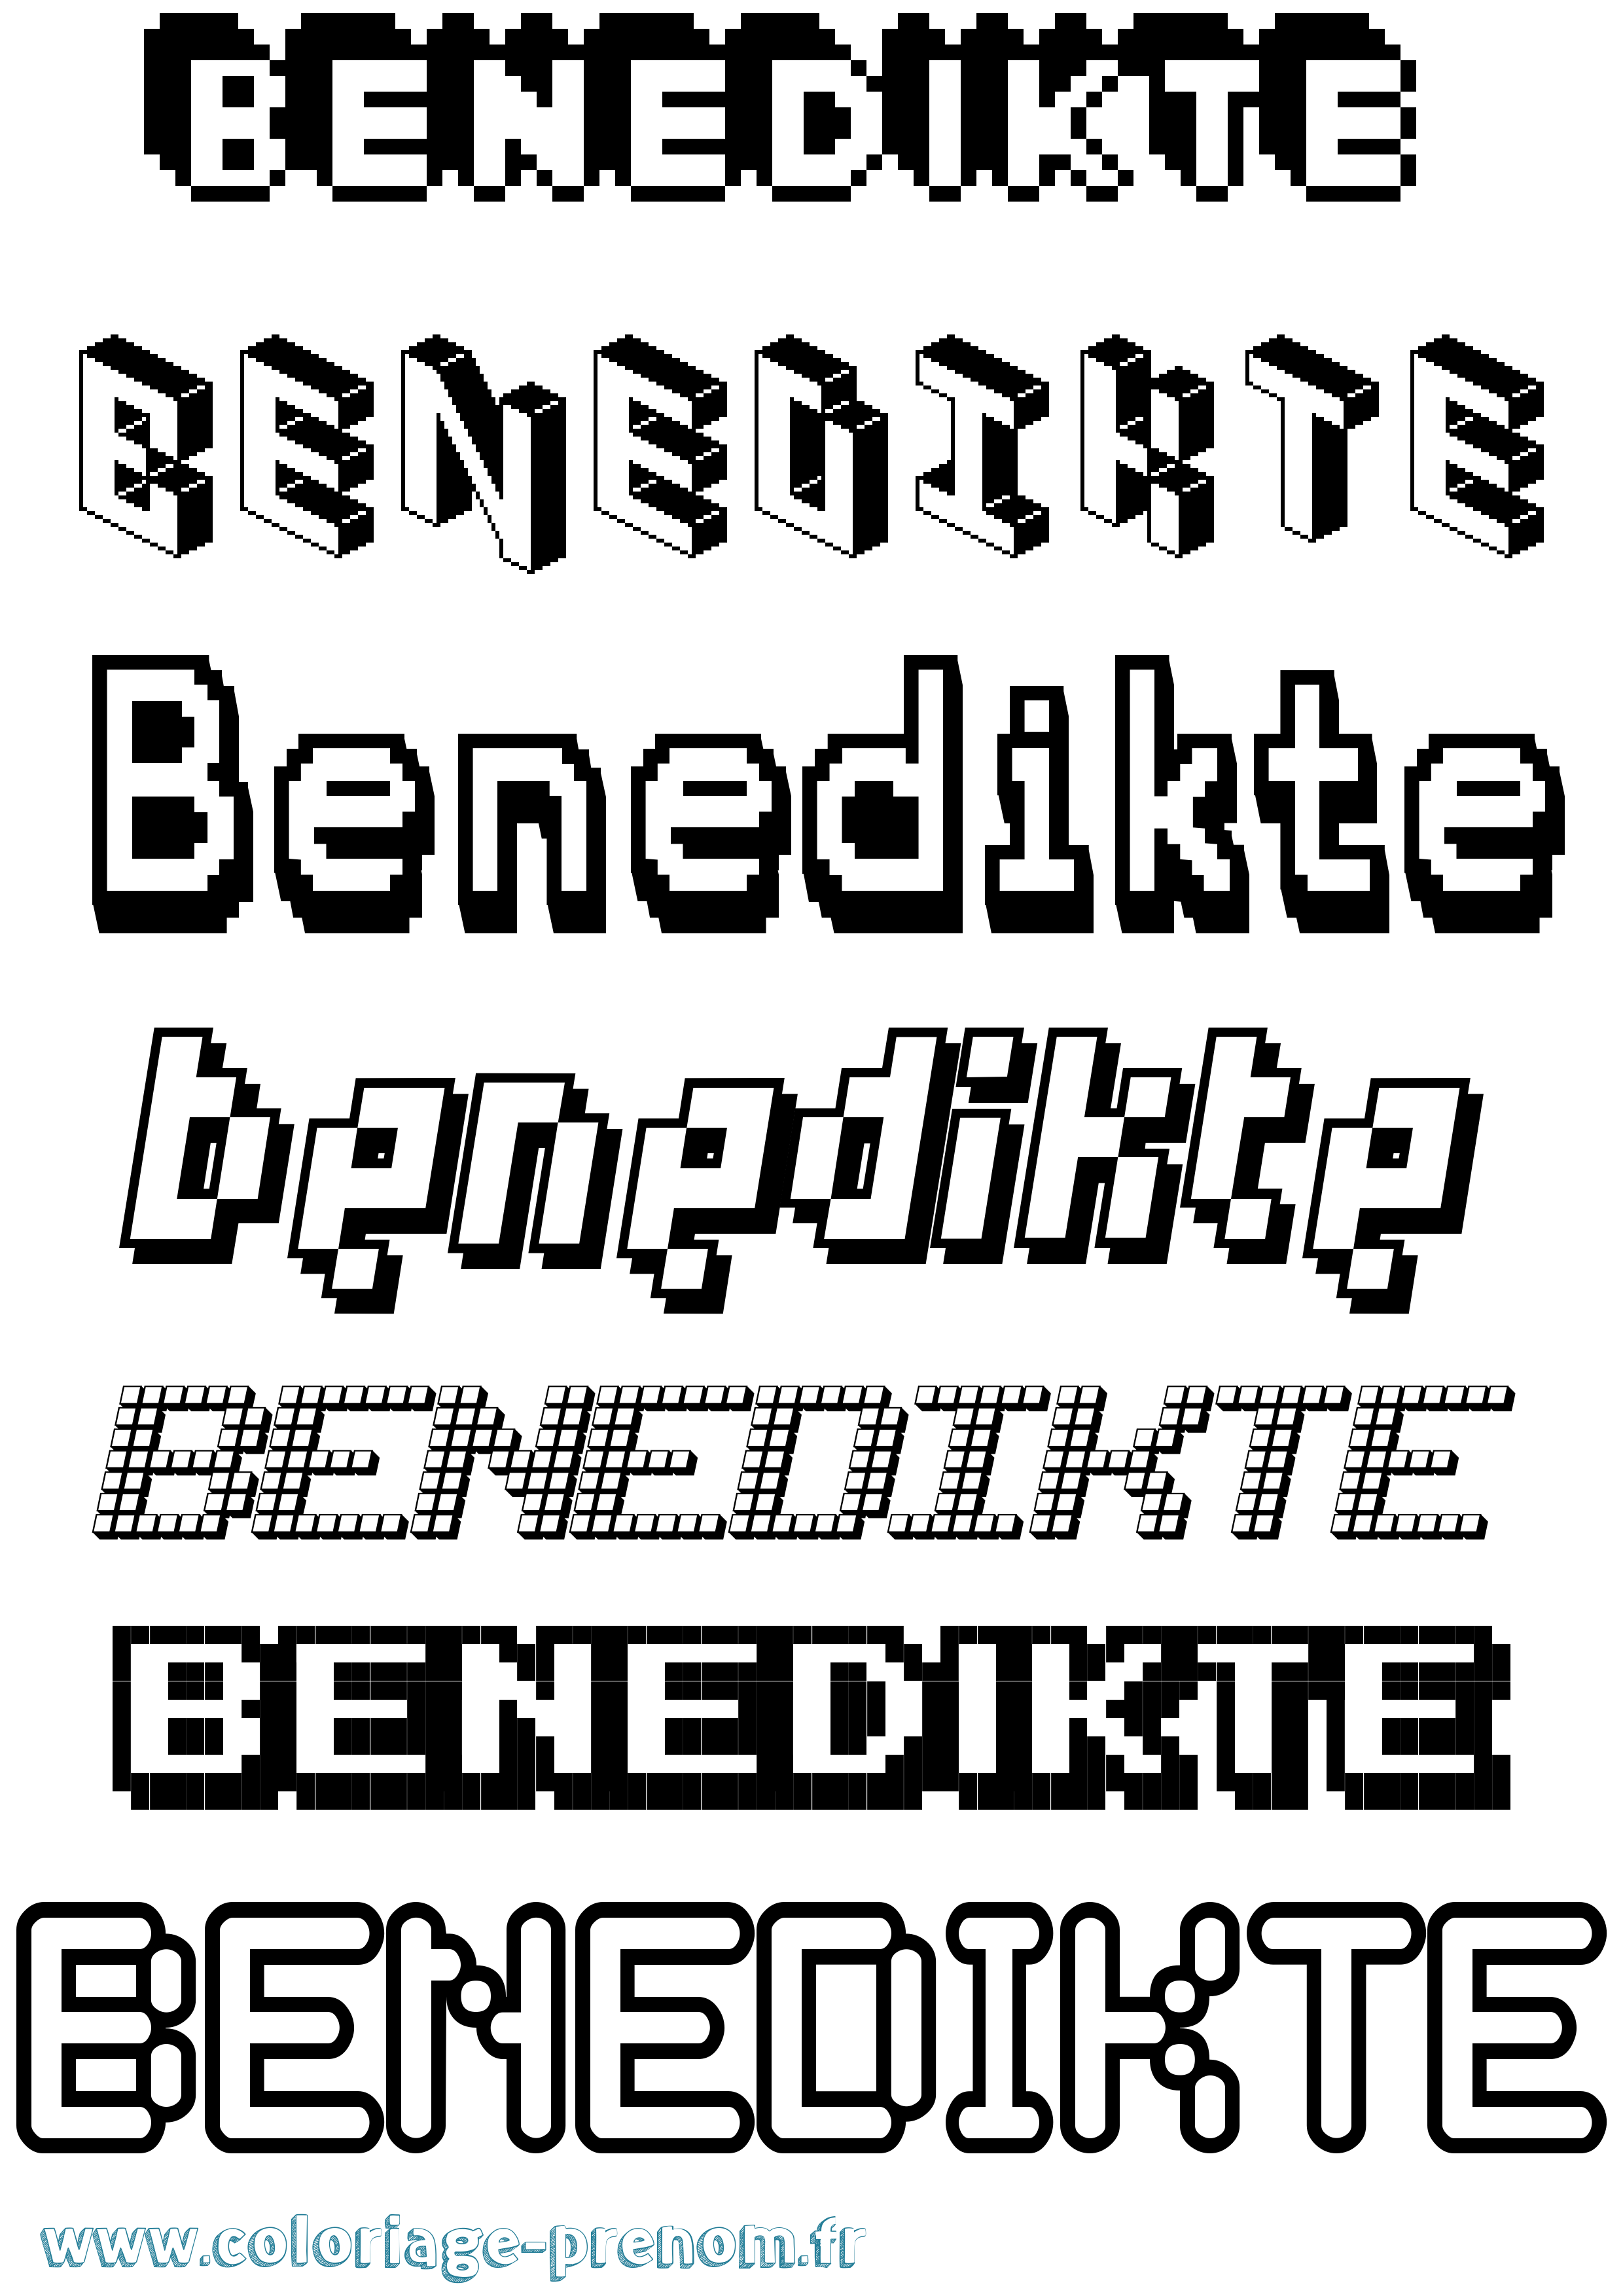 Coloriage prénom Benedikte Pixel